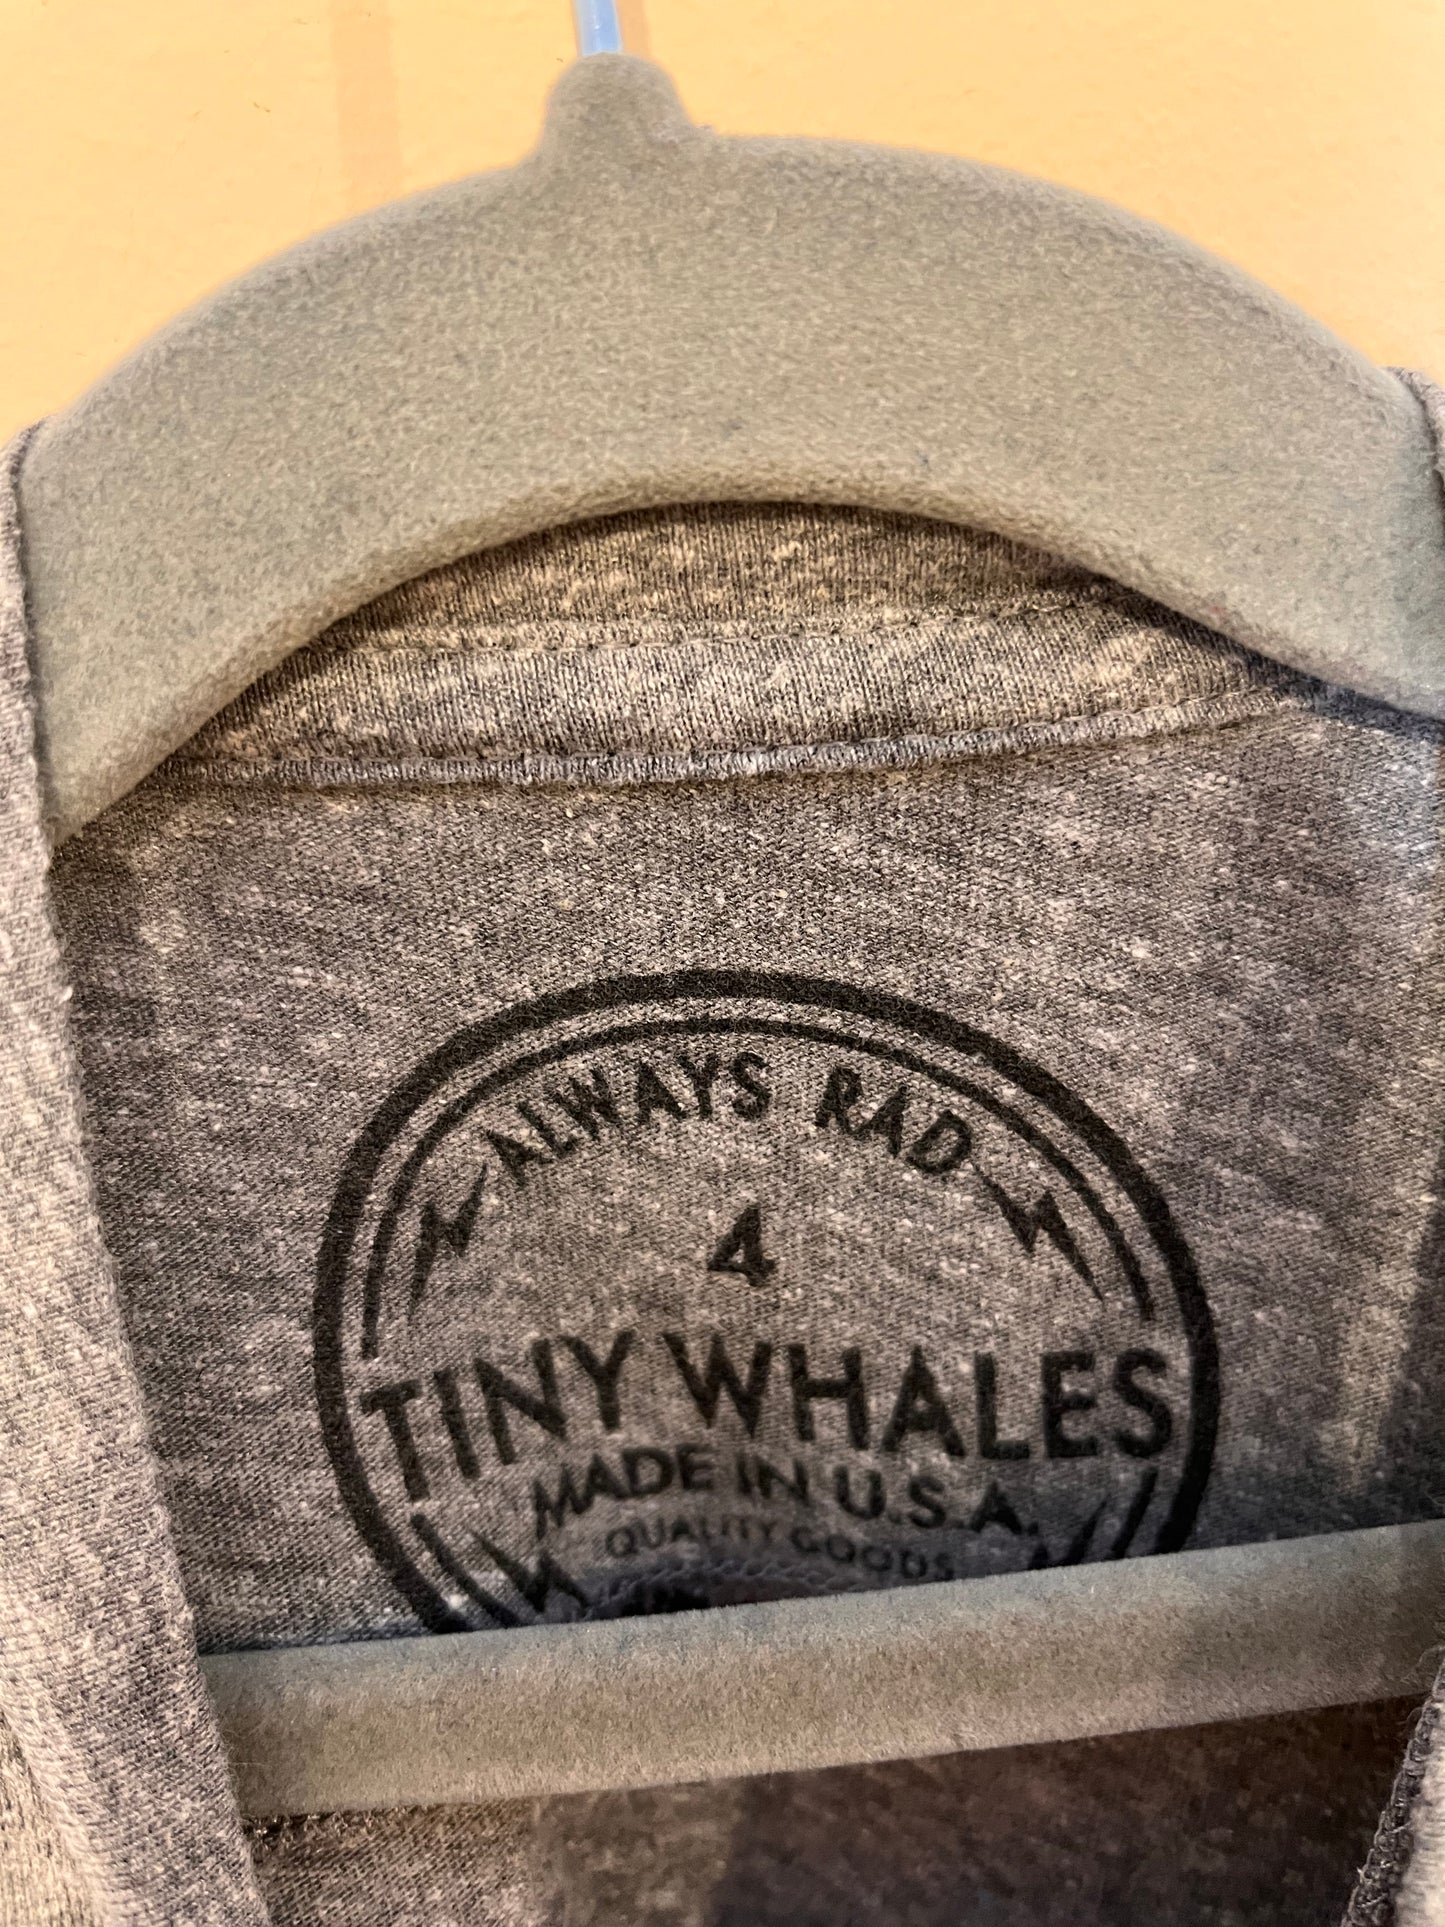 Tiny Whales "I'm Not A Tourist" T-Shirt (4T)